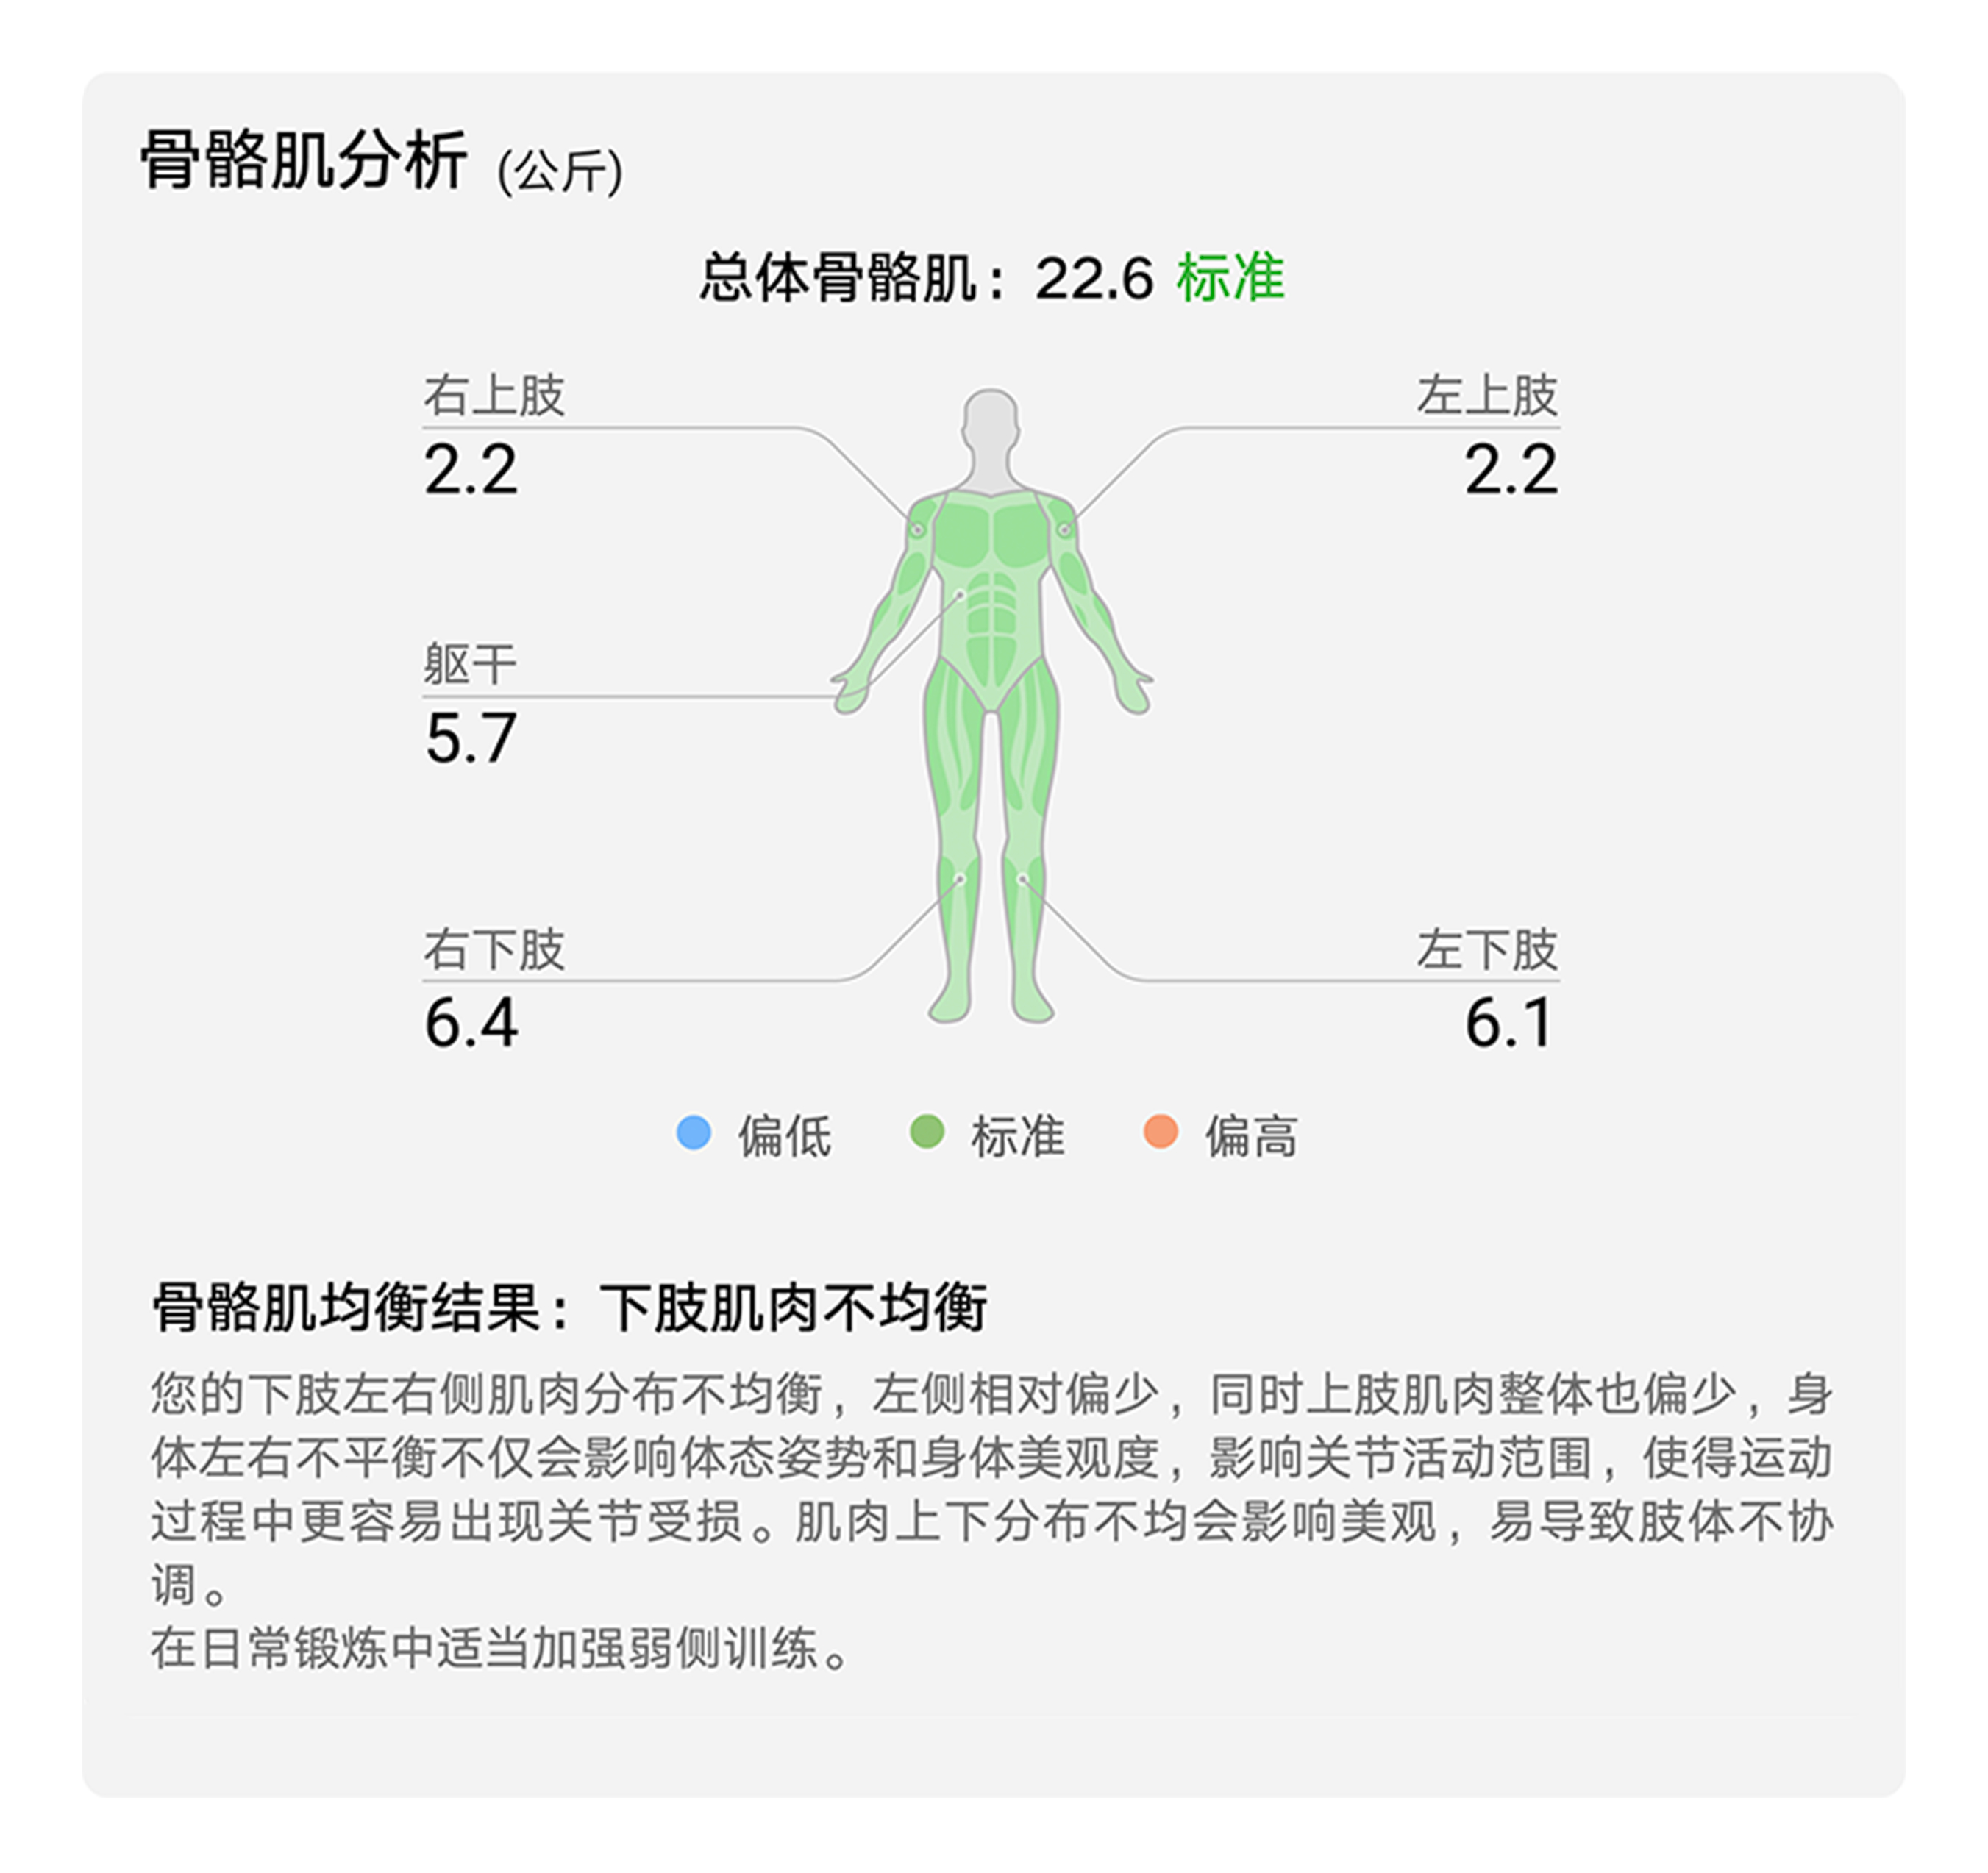 HUAWEI Scale 3 Pro 人体成分分析报告